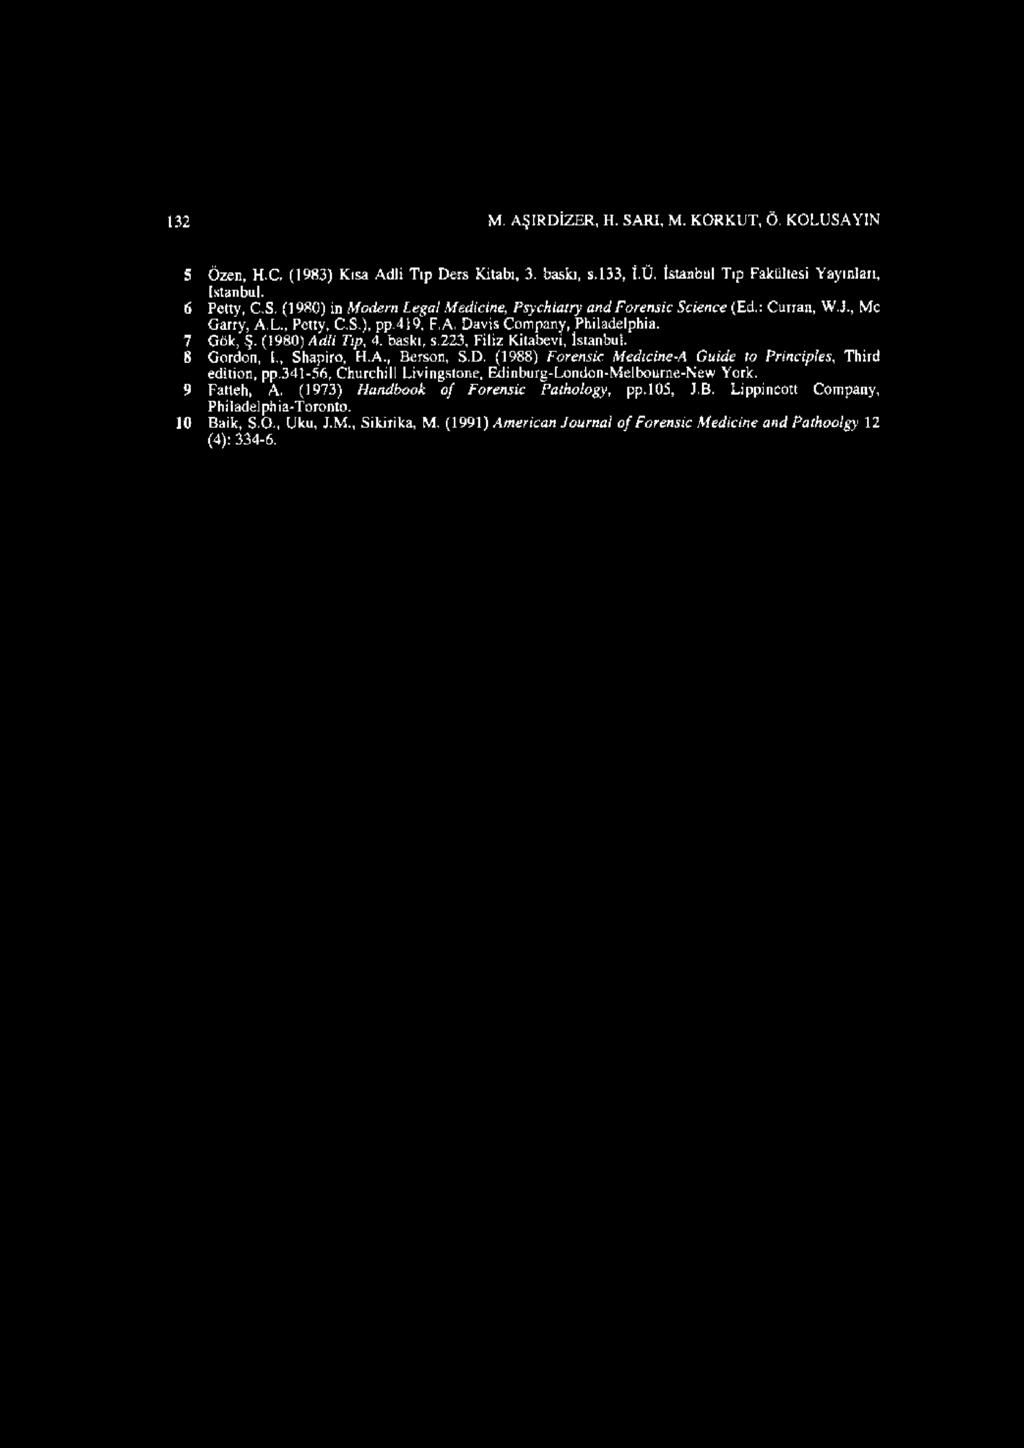 341-56rchurchill Livingstone, Edinburg-London-Melboume-New York. 9 Fatteh, A. (1973) Handbook of Forensic Pathology, pp.105, J.B. Lippincott Company, Philadelphia-Toronto. 10 Baik, S.O., Uku, J.M., Sikirika, M.